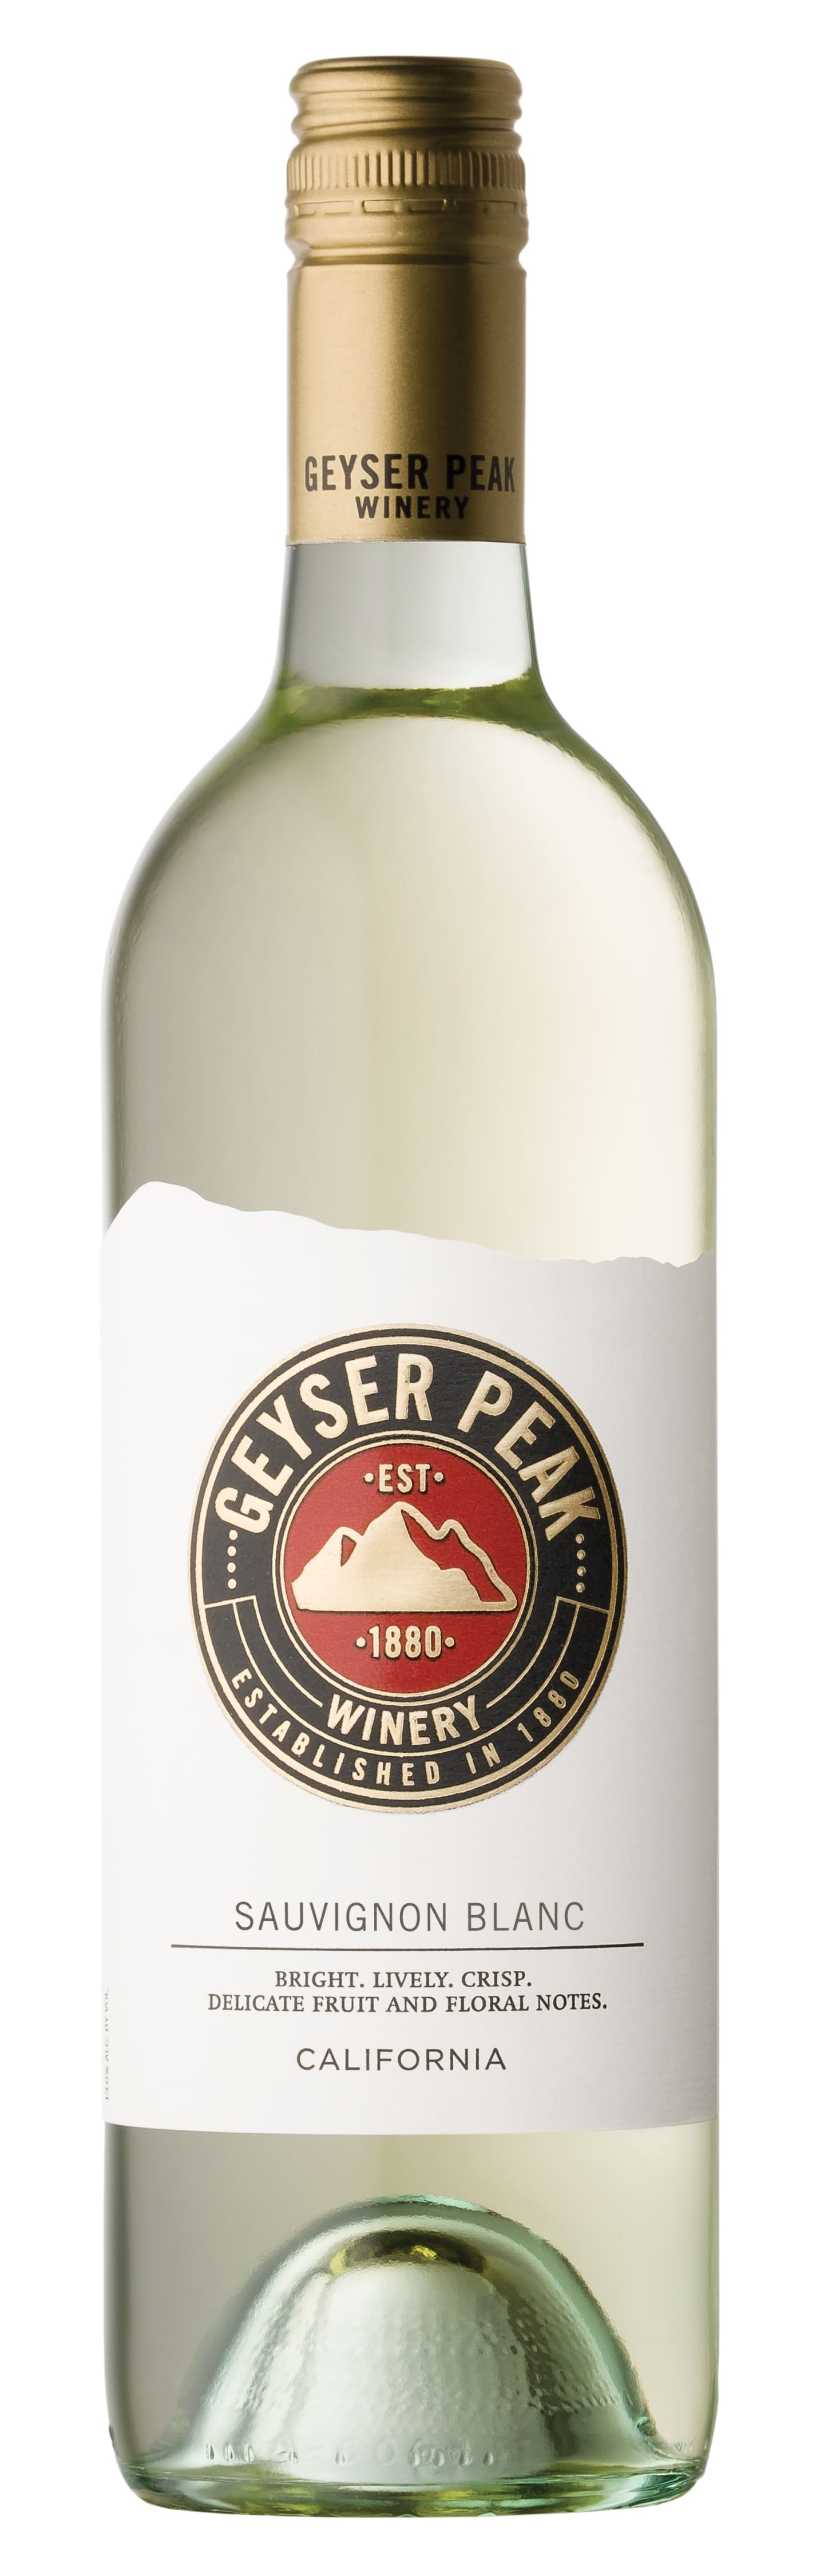 Geyser Peak Sauvignon Blanc 2018